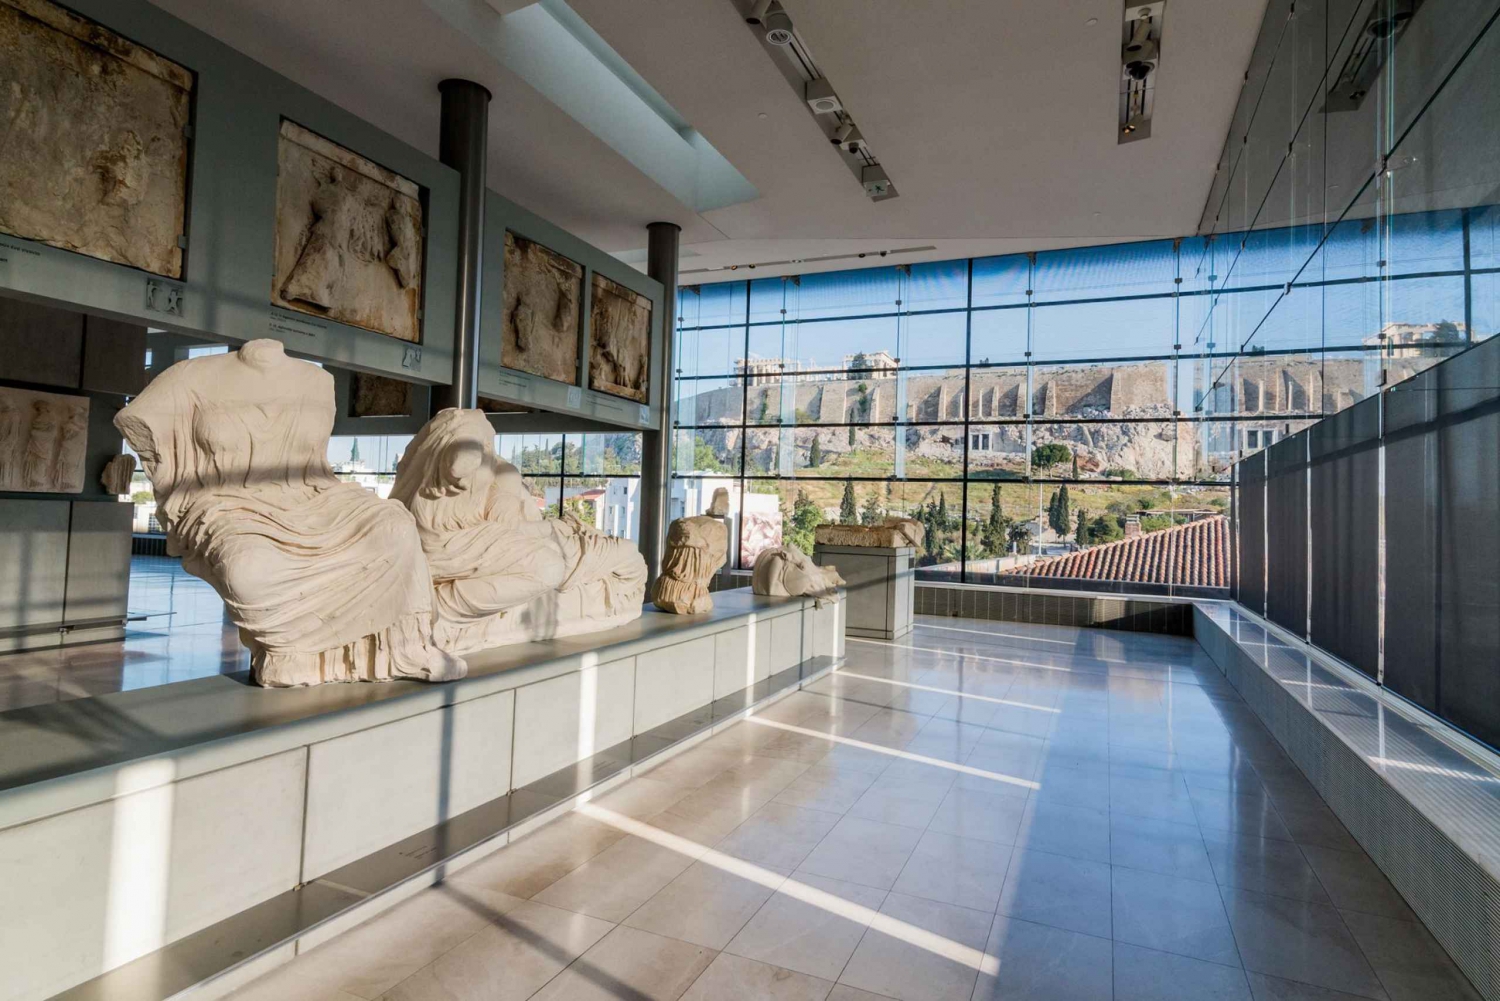 Aten: Akropolismuseet med inträde i linjen